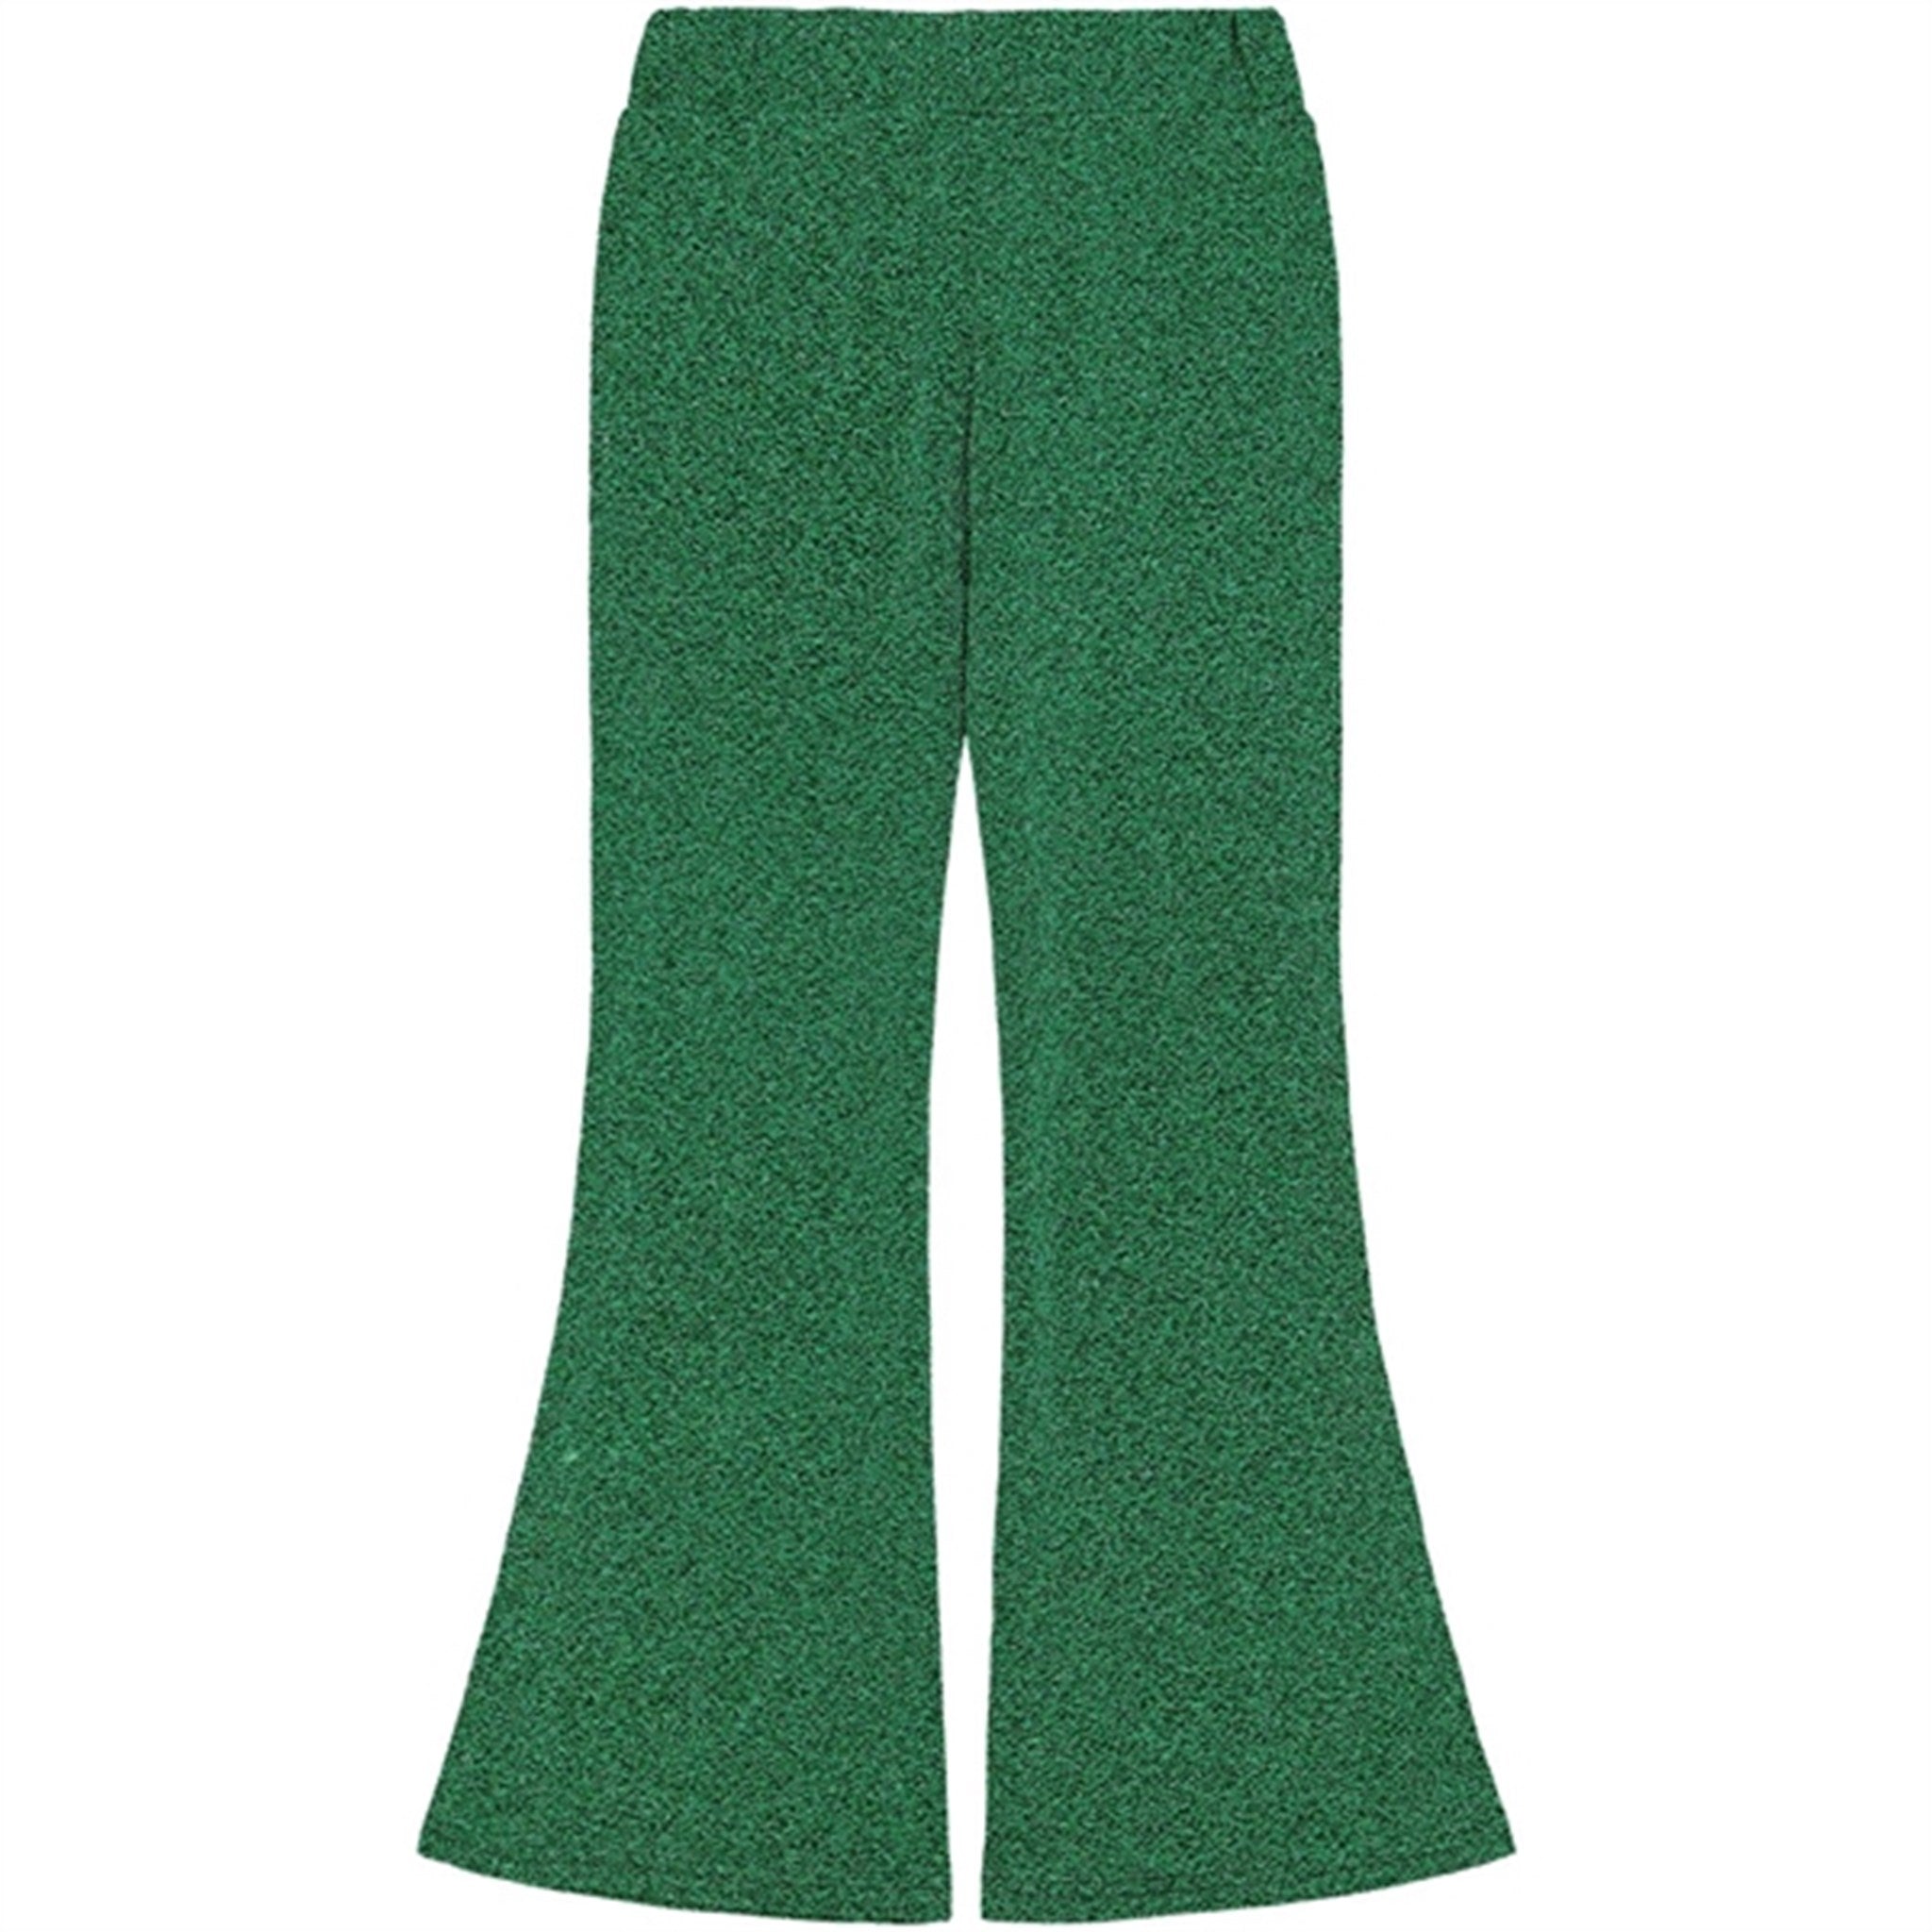 The NEW Bright Green Jidalou Flared Pants